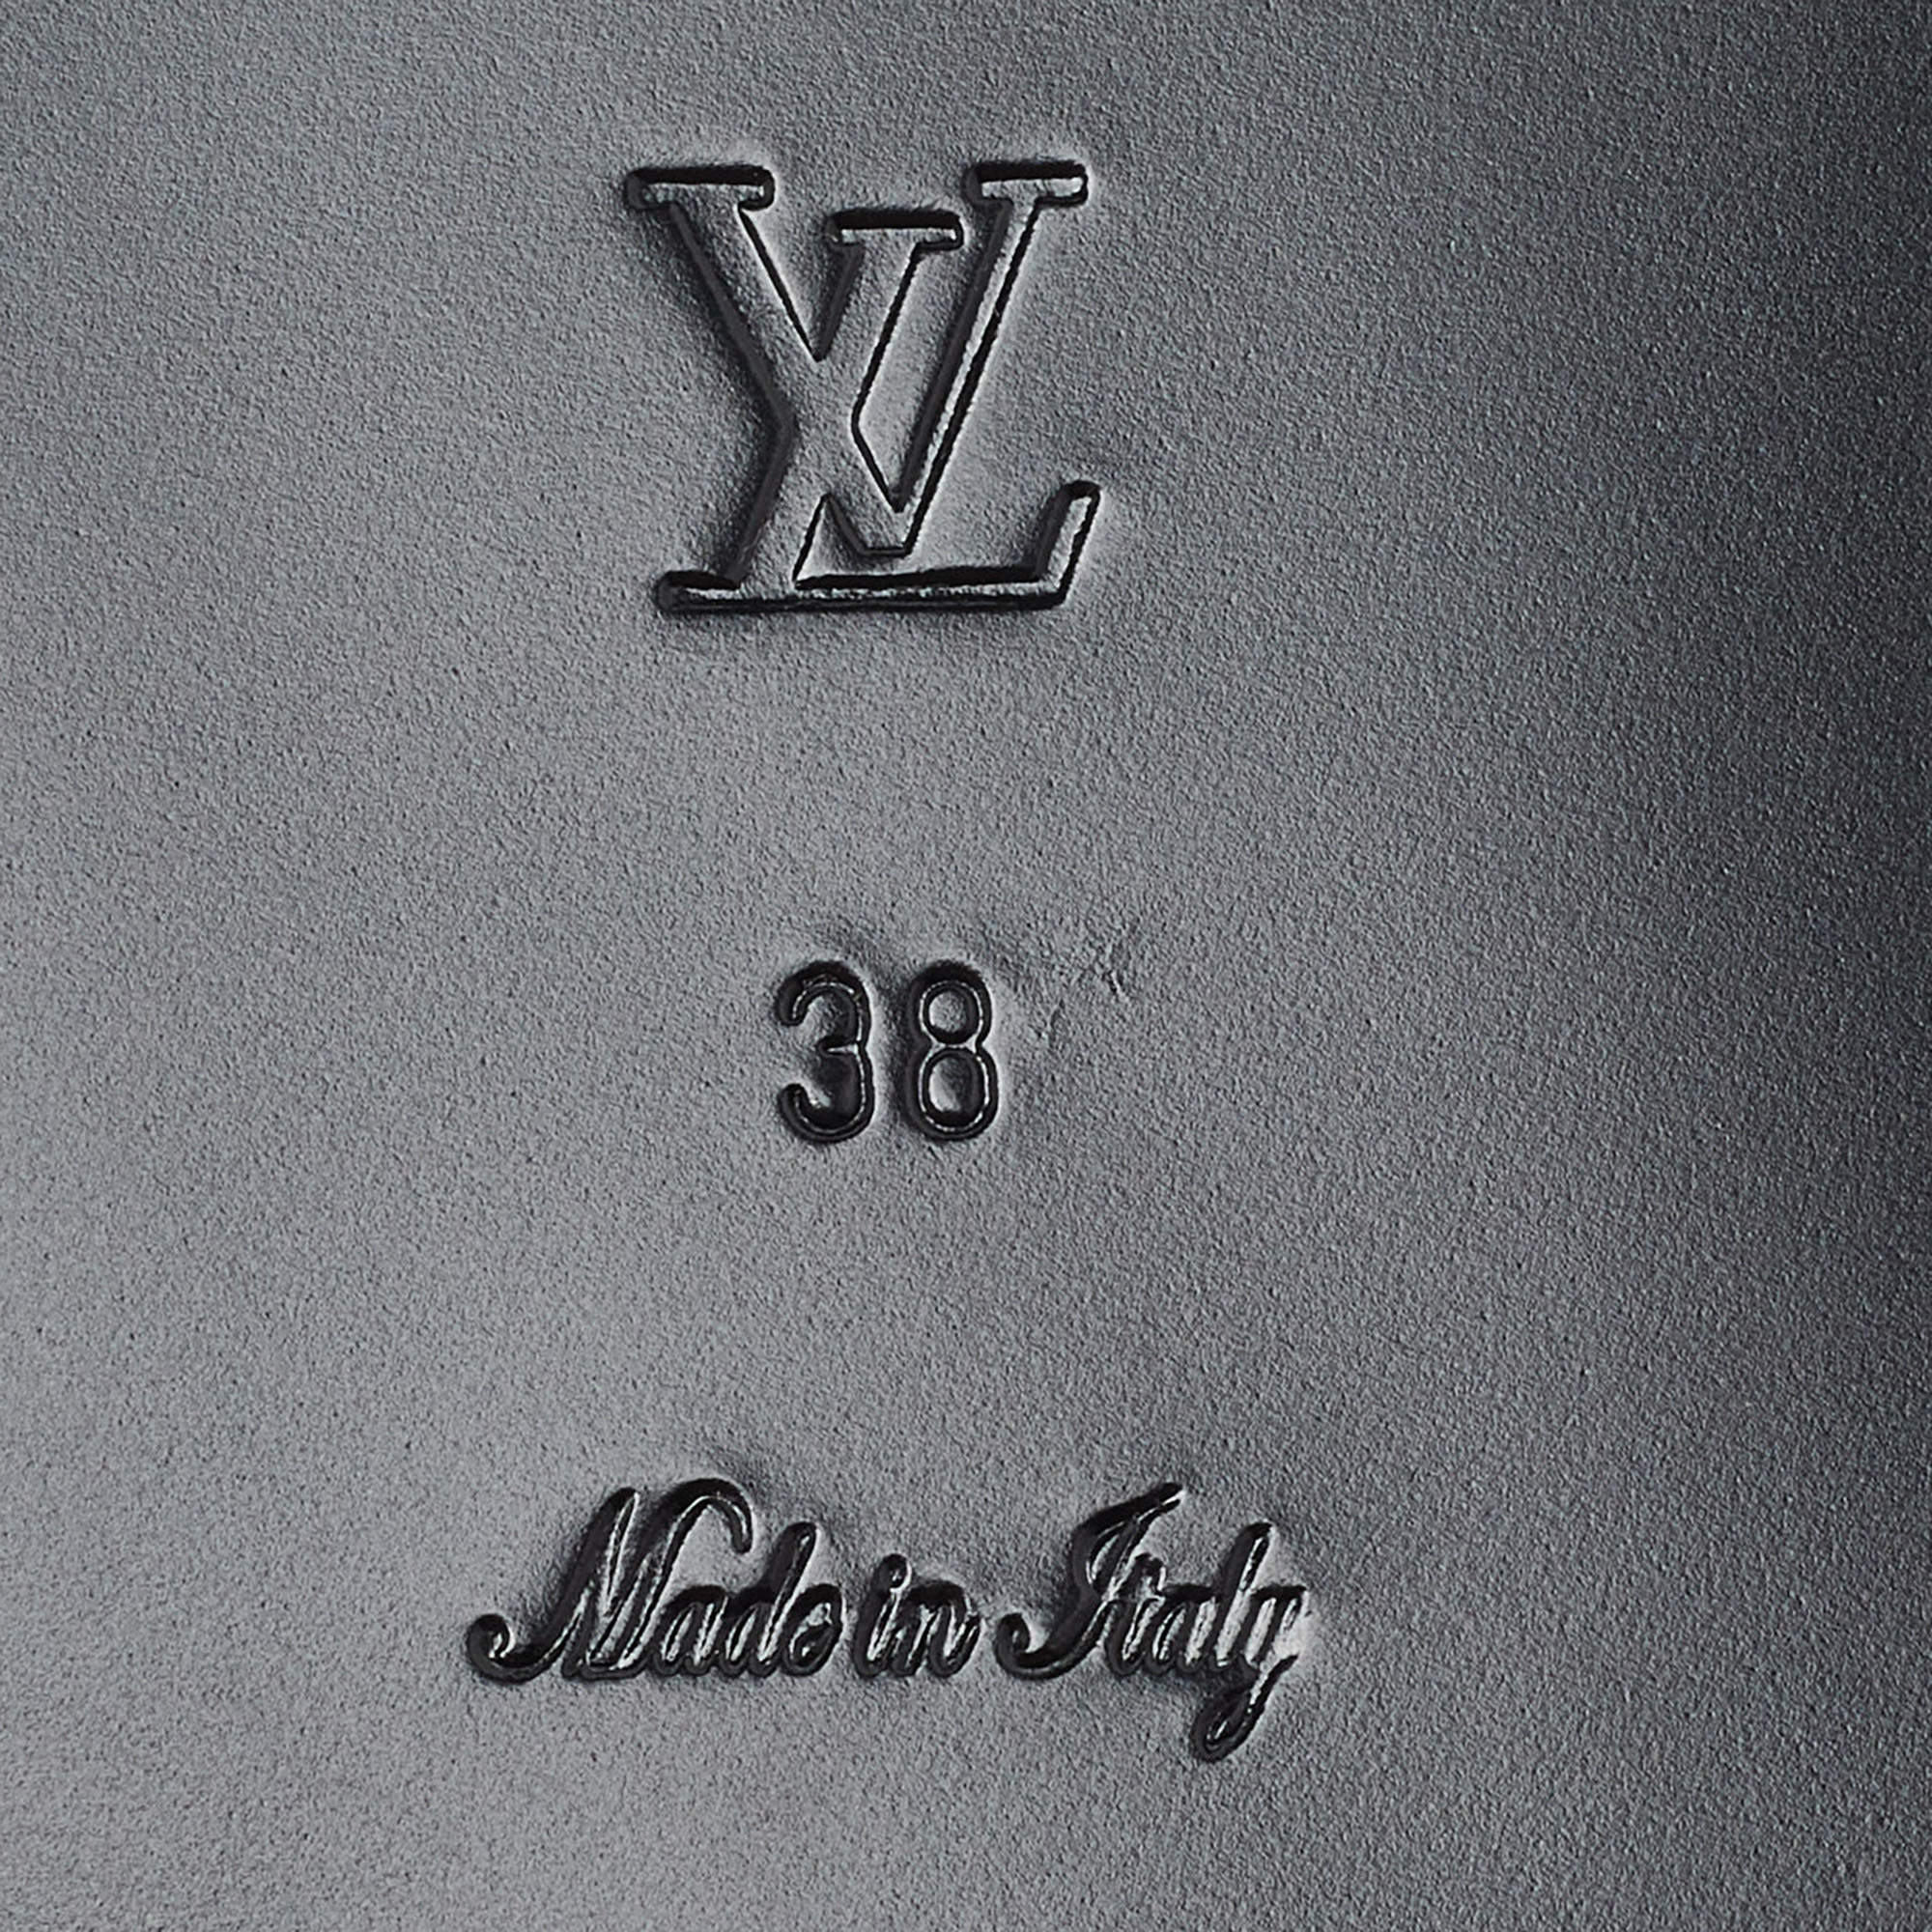 Louis Vuitton Gold Ostrich Leather Lock It Flat Sandals Size 38